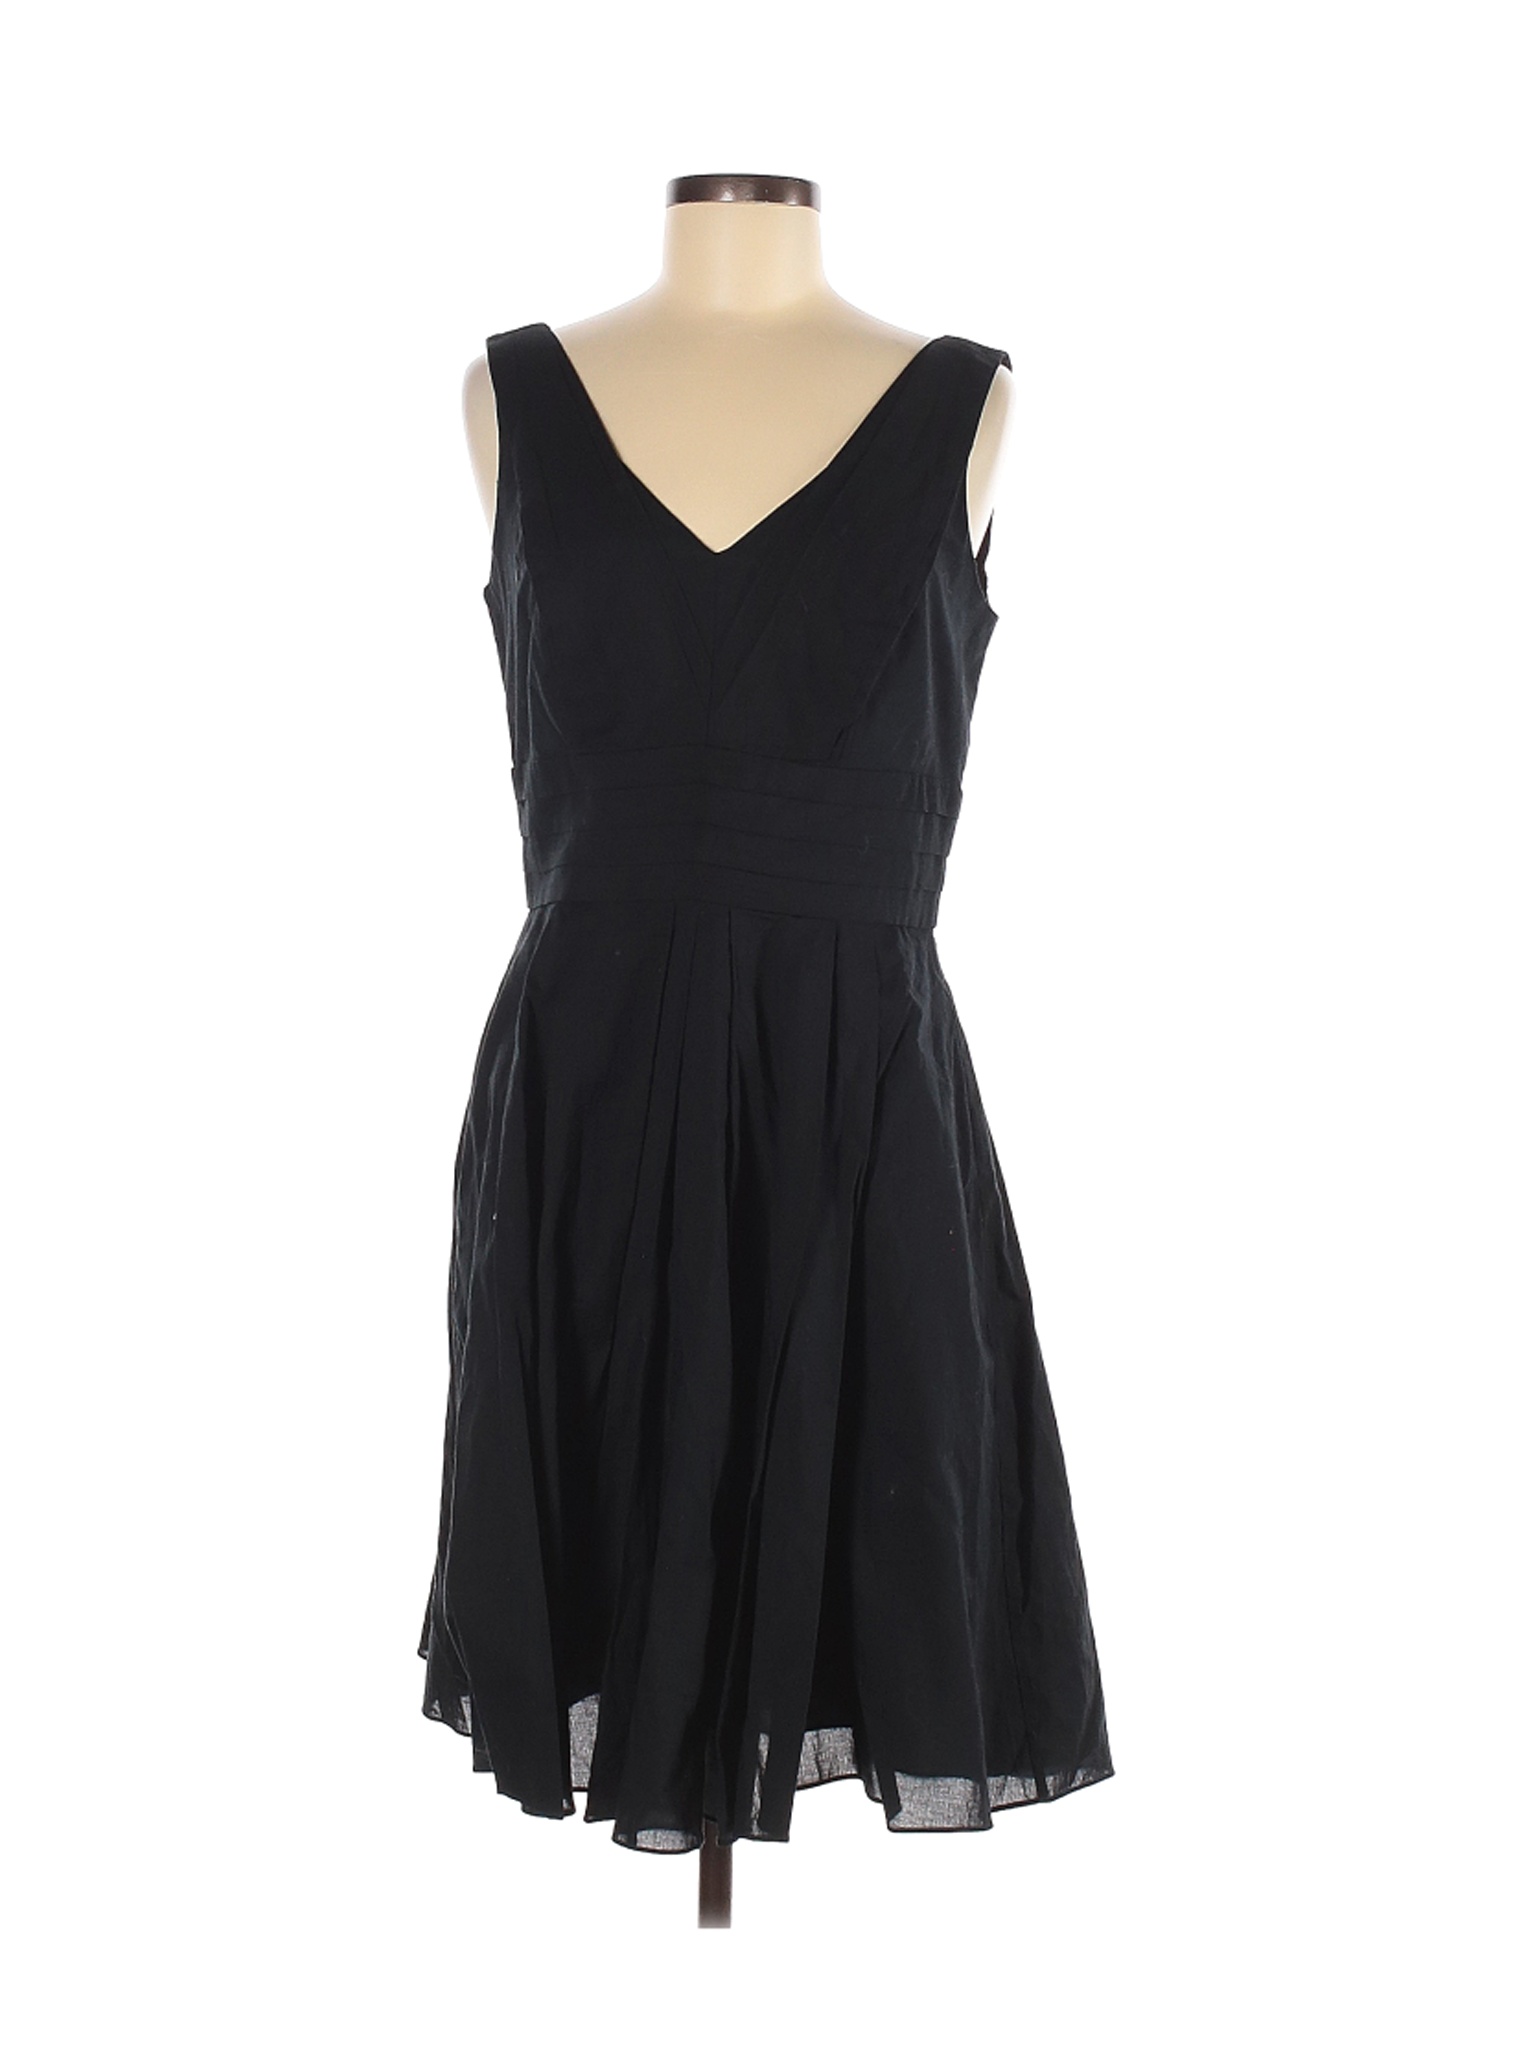 White House Black Market 100% Cotton Solid Black Casual Dress Size 8 ...